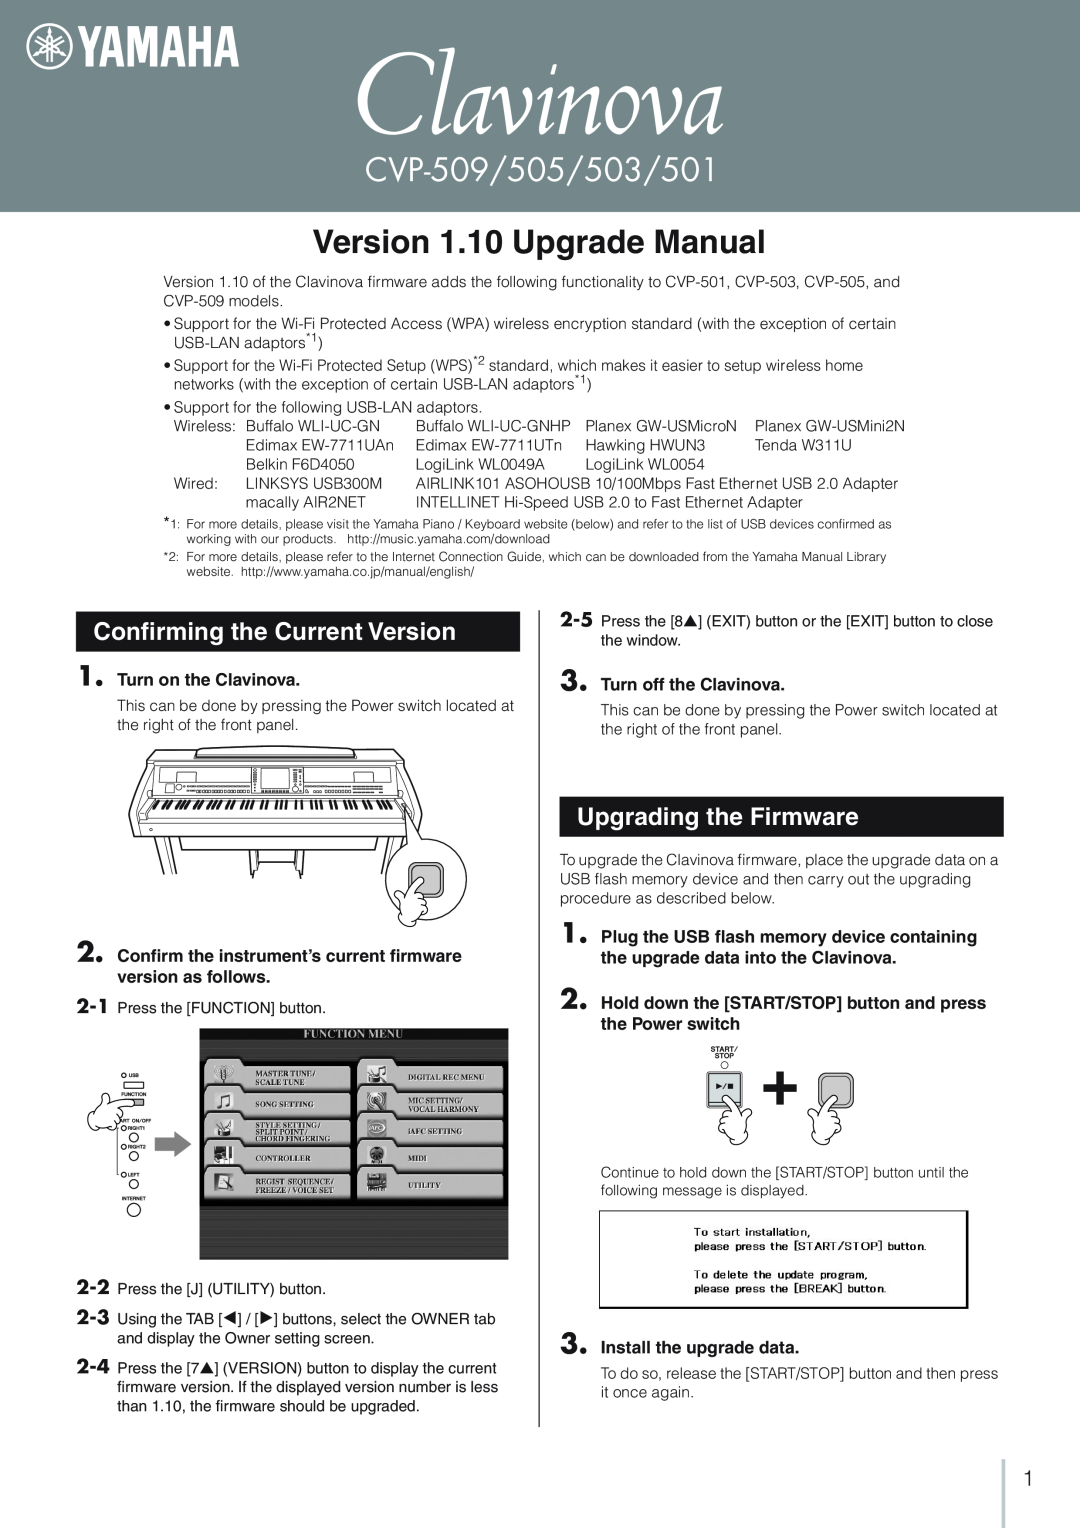 Yamaha CVP-509 manual Conﬁrming the Current Version, Upgrading the Firmware, Turn on the Clavinova, Turn off the Clavinova 